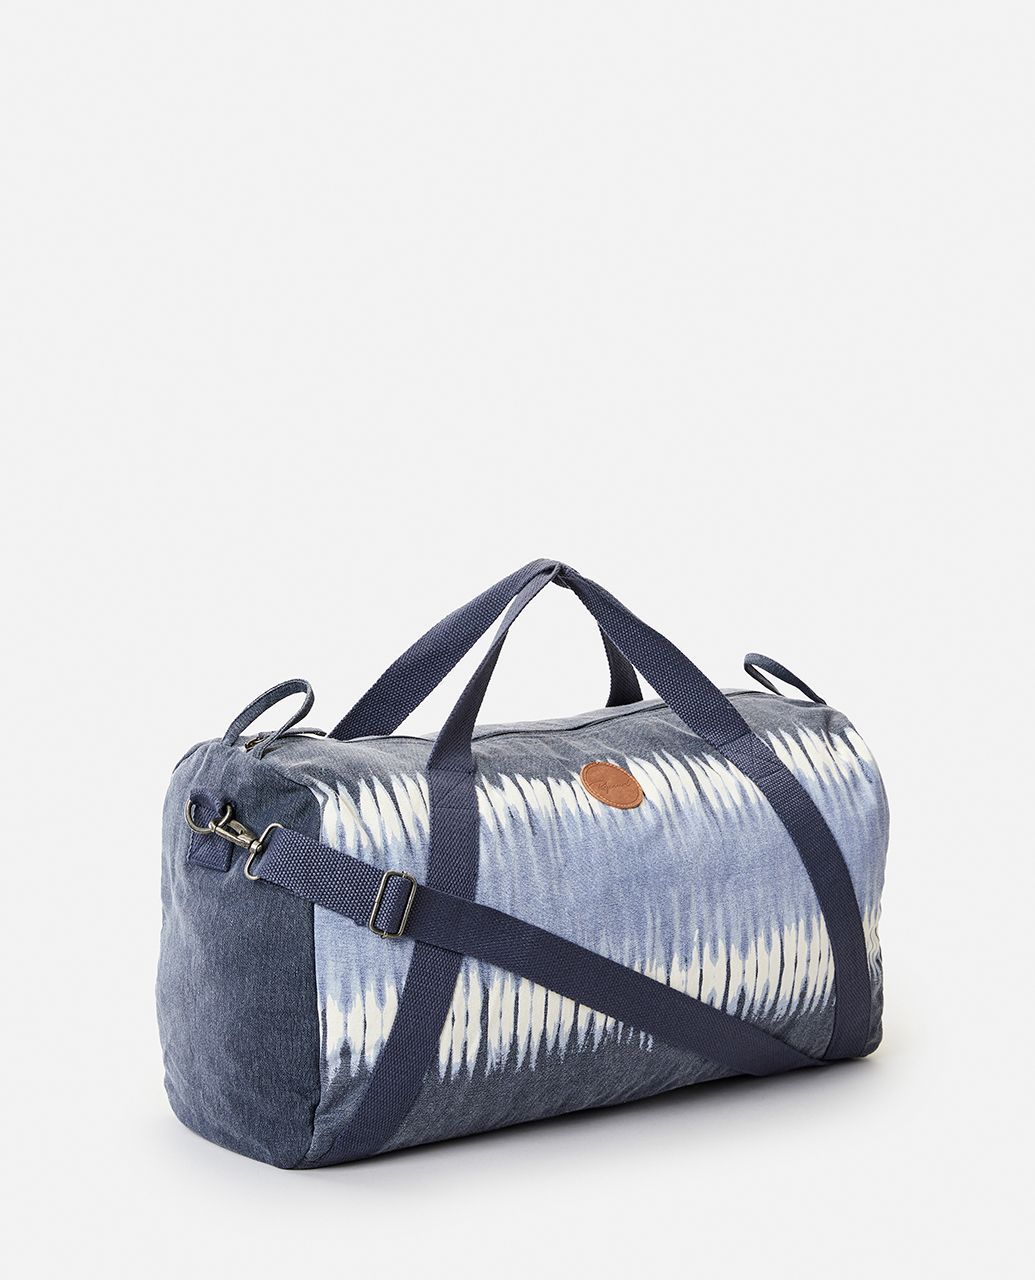 Дорожная сумка женская Rip Curl 007WTB синяя, 55х38х5 см